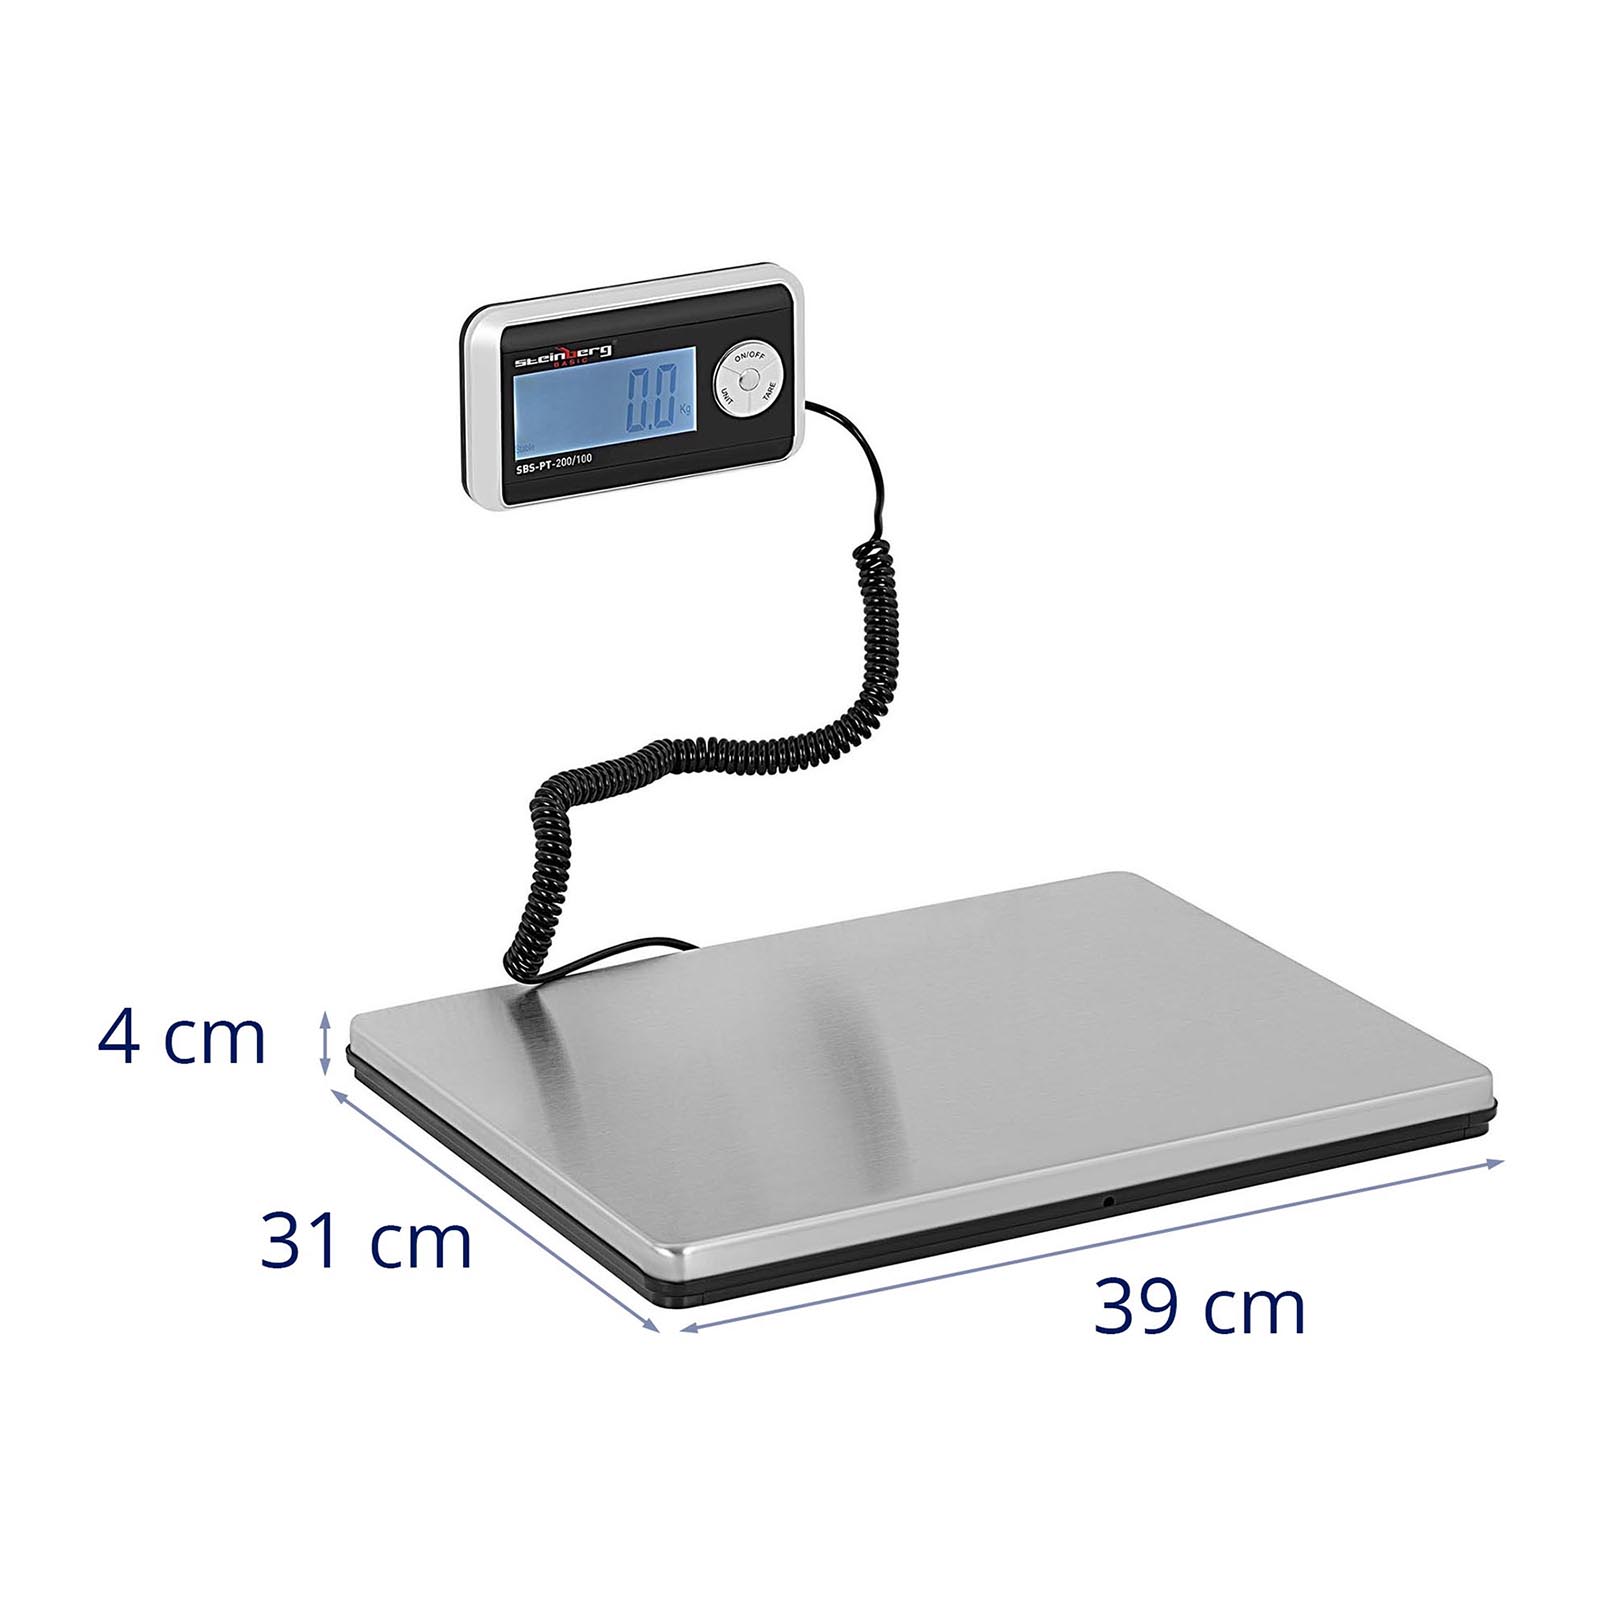 Bilancia pesapacchi digitale- 200 kg / 100 g - Basic - LCD esterno